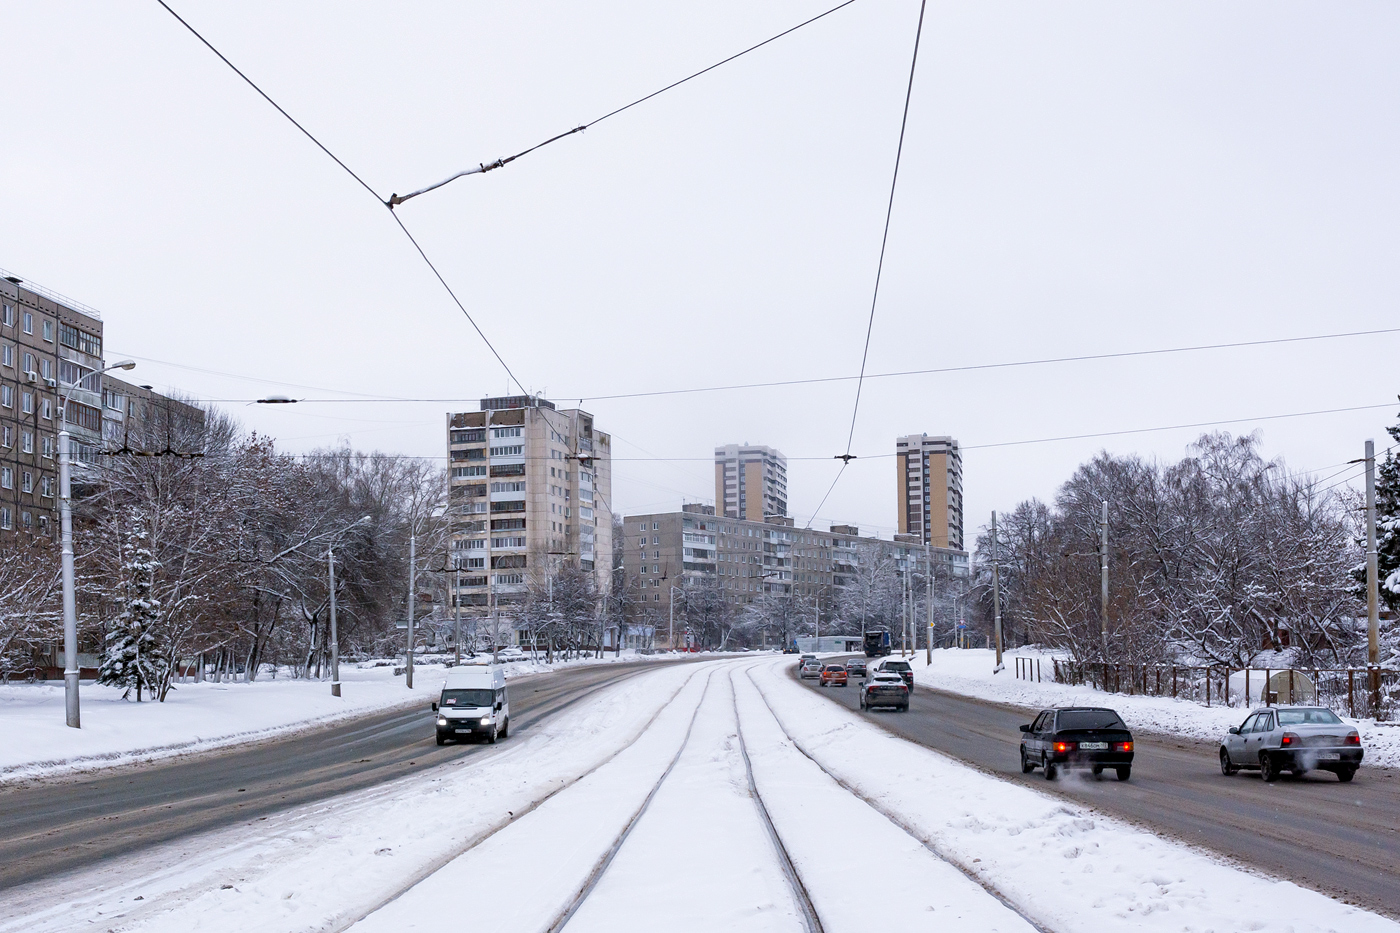 Ufa — Tramway network — North; Ufa — Trolleybus network — North